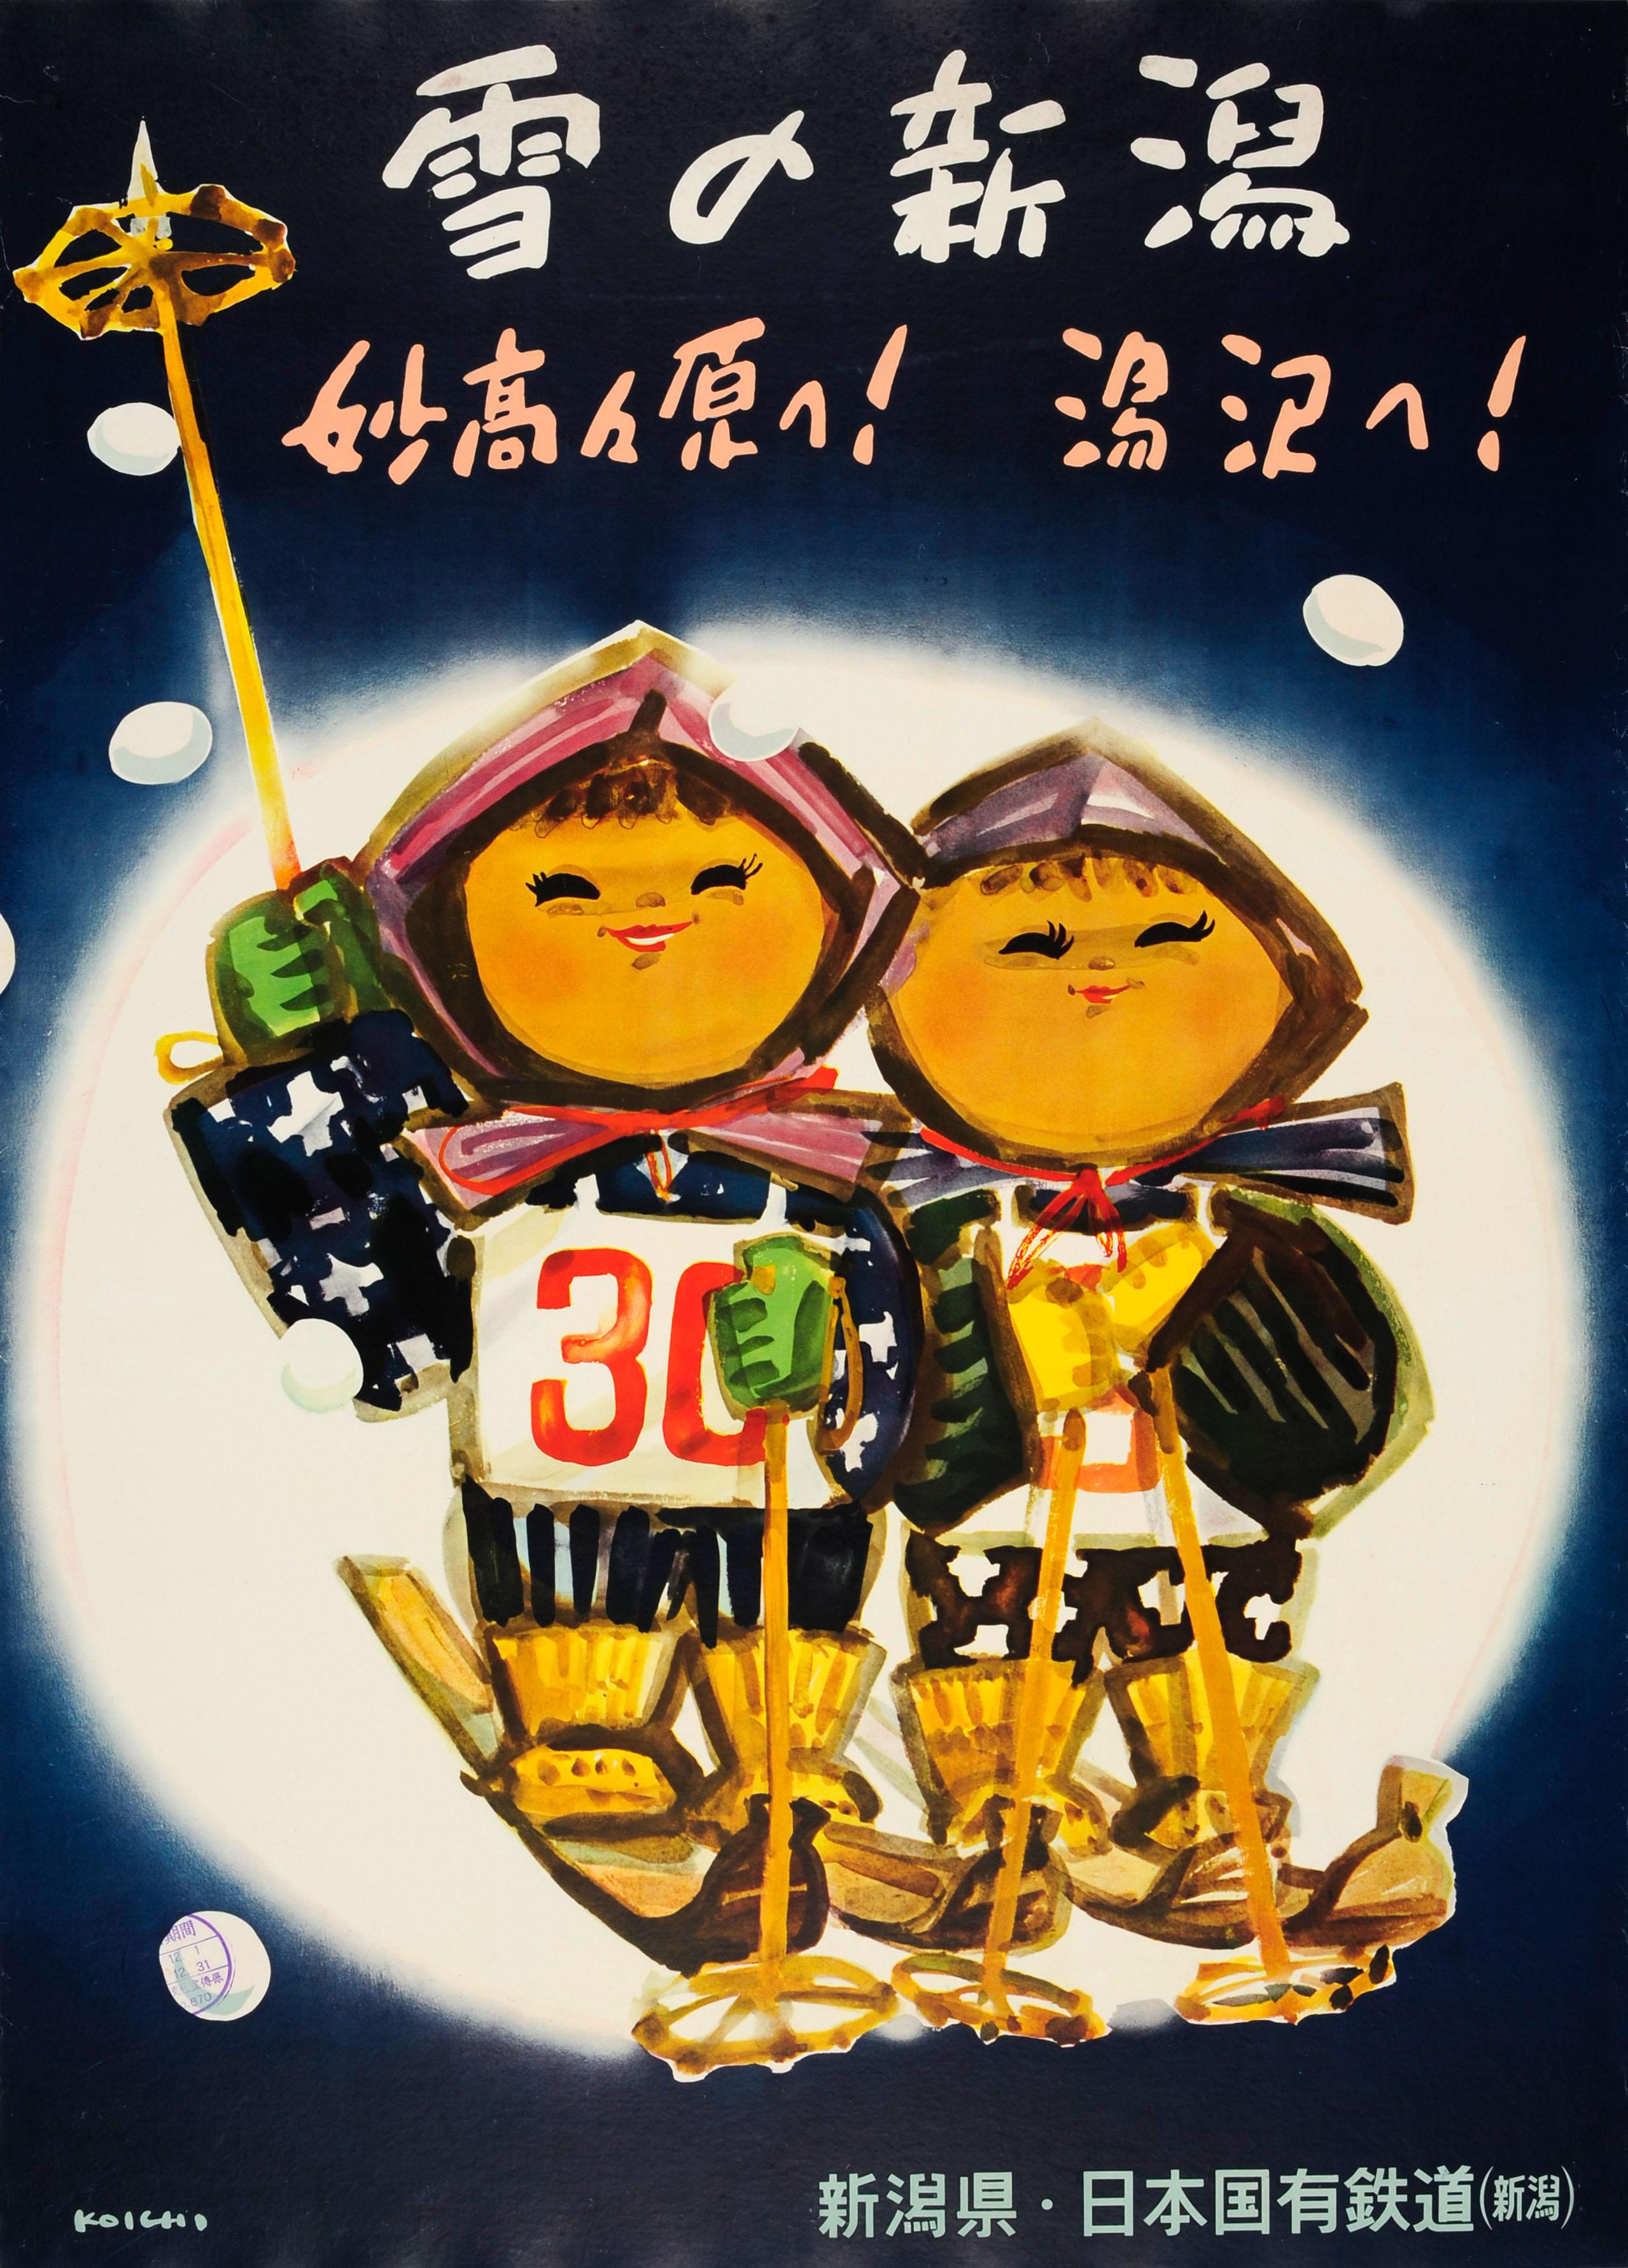 Koichi Print - Original Vintage Japanese Ski Poster Featuring Smiling Children Skiers On Skis